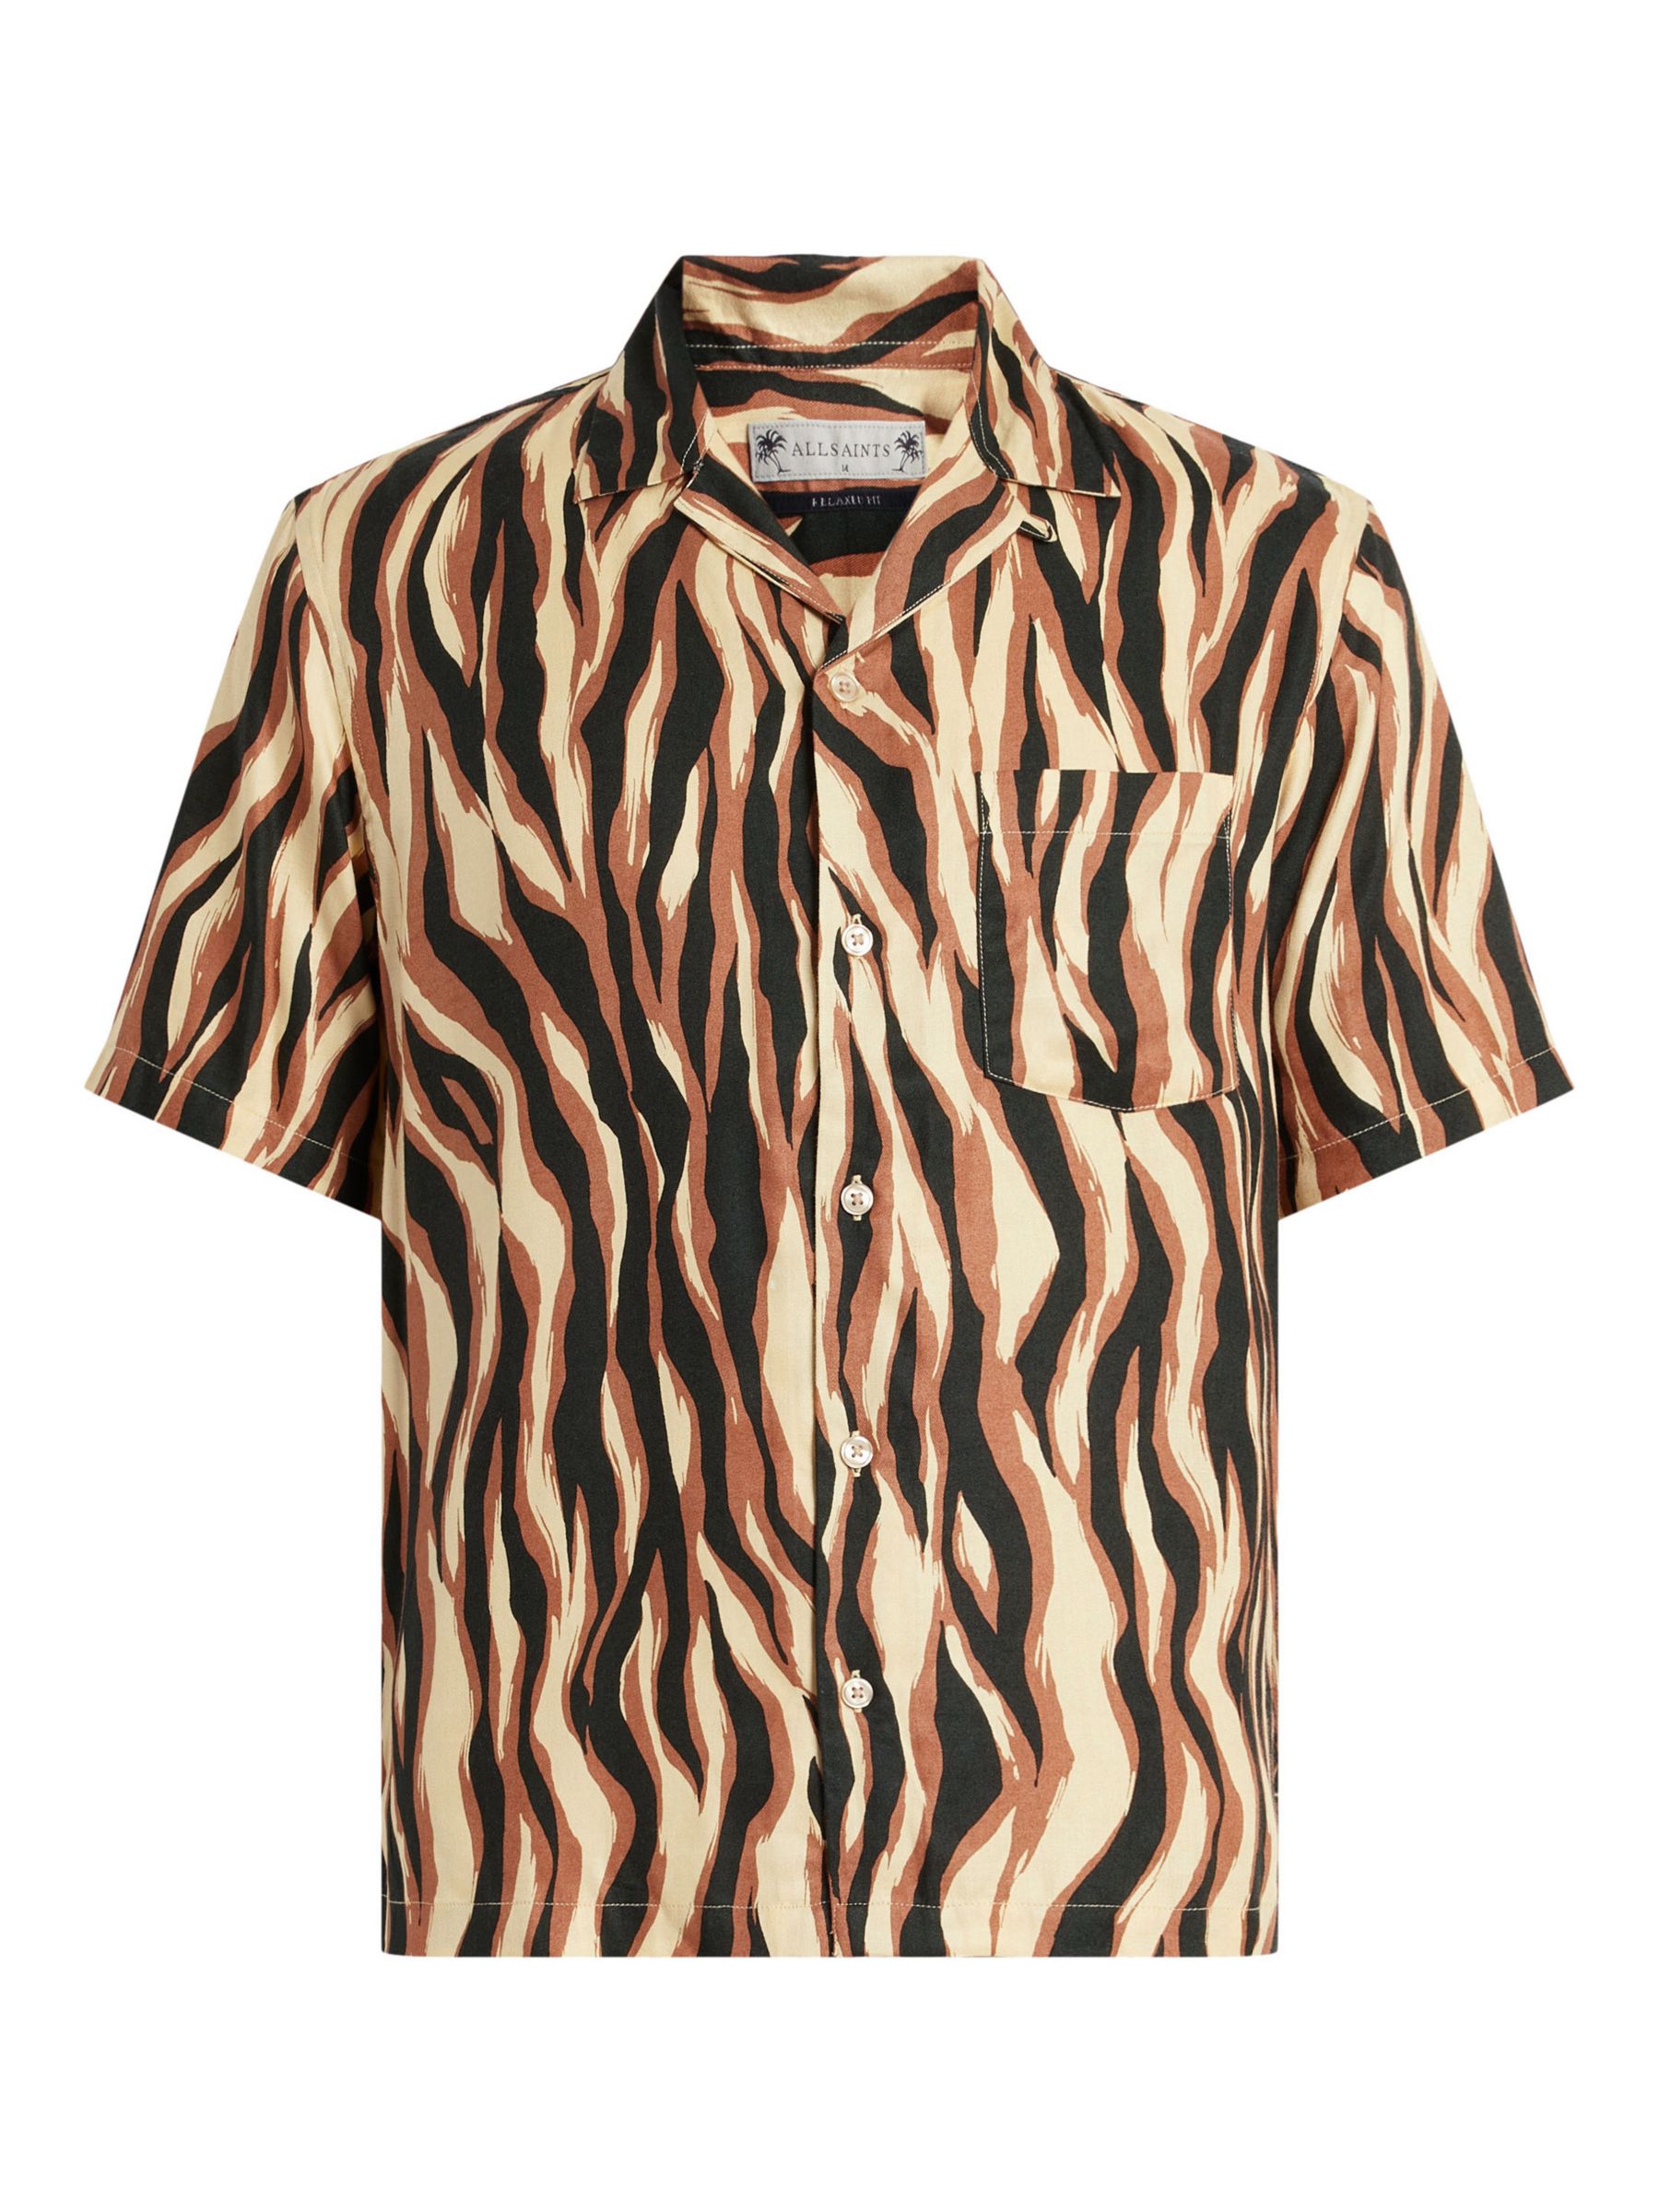 AllSaints Fired Short Sleeve Shirt, Brown/Multi, S